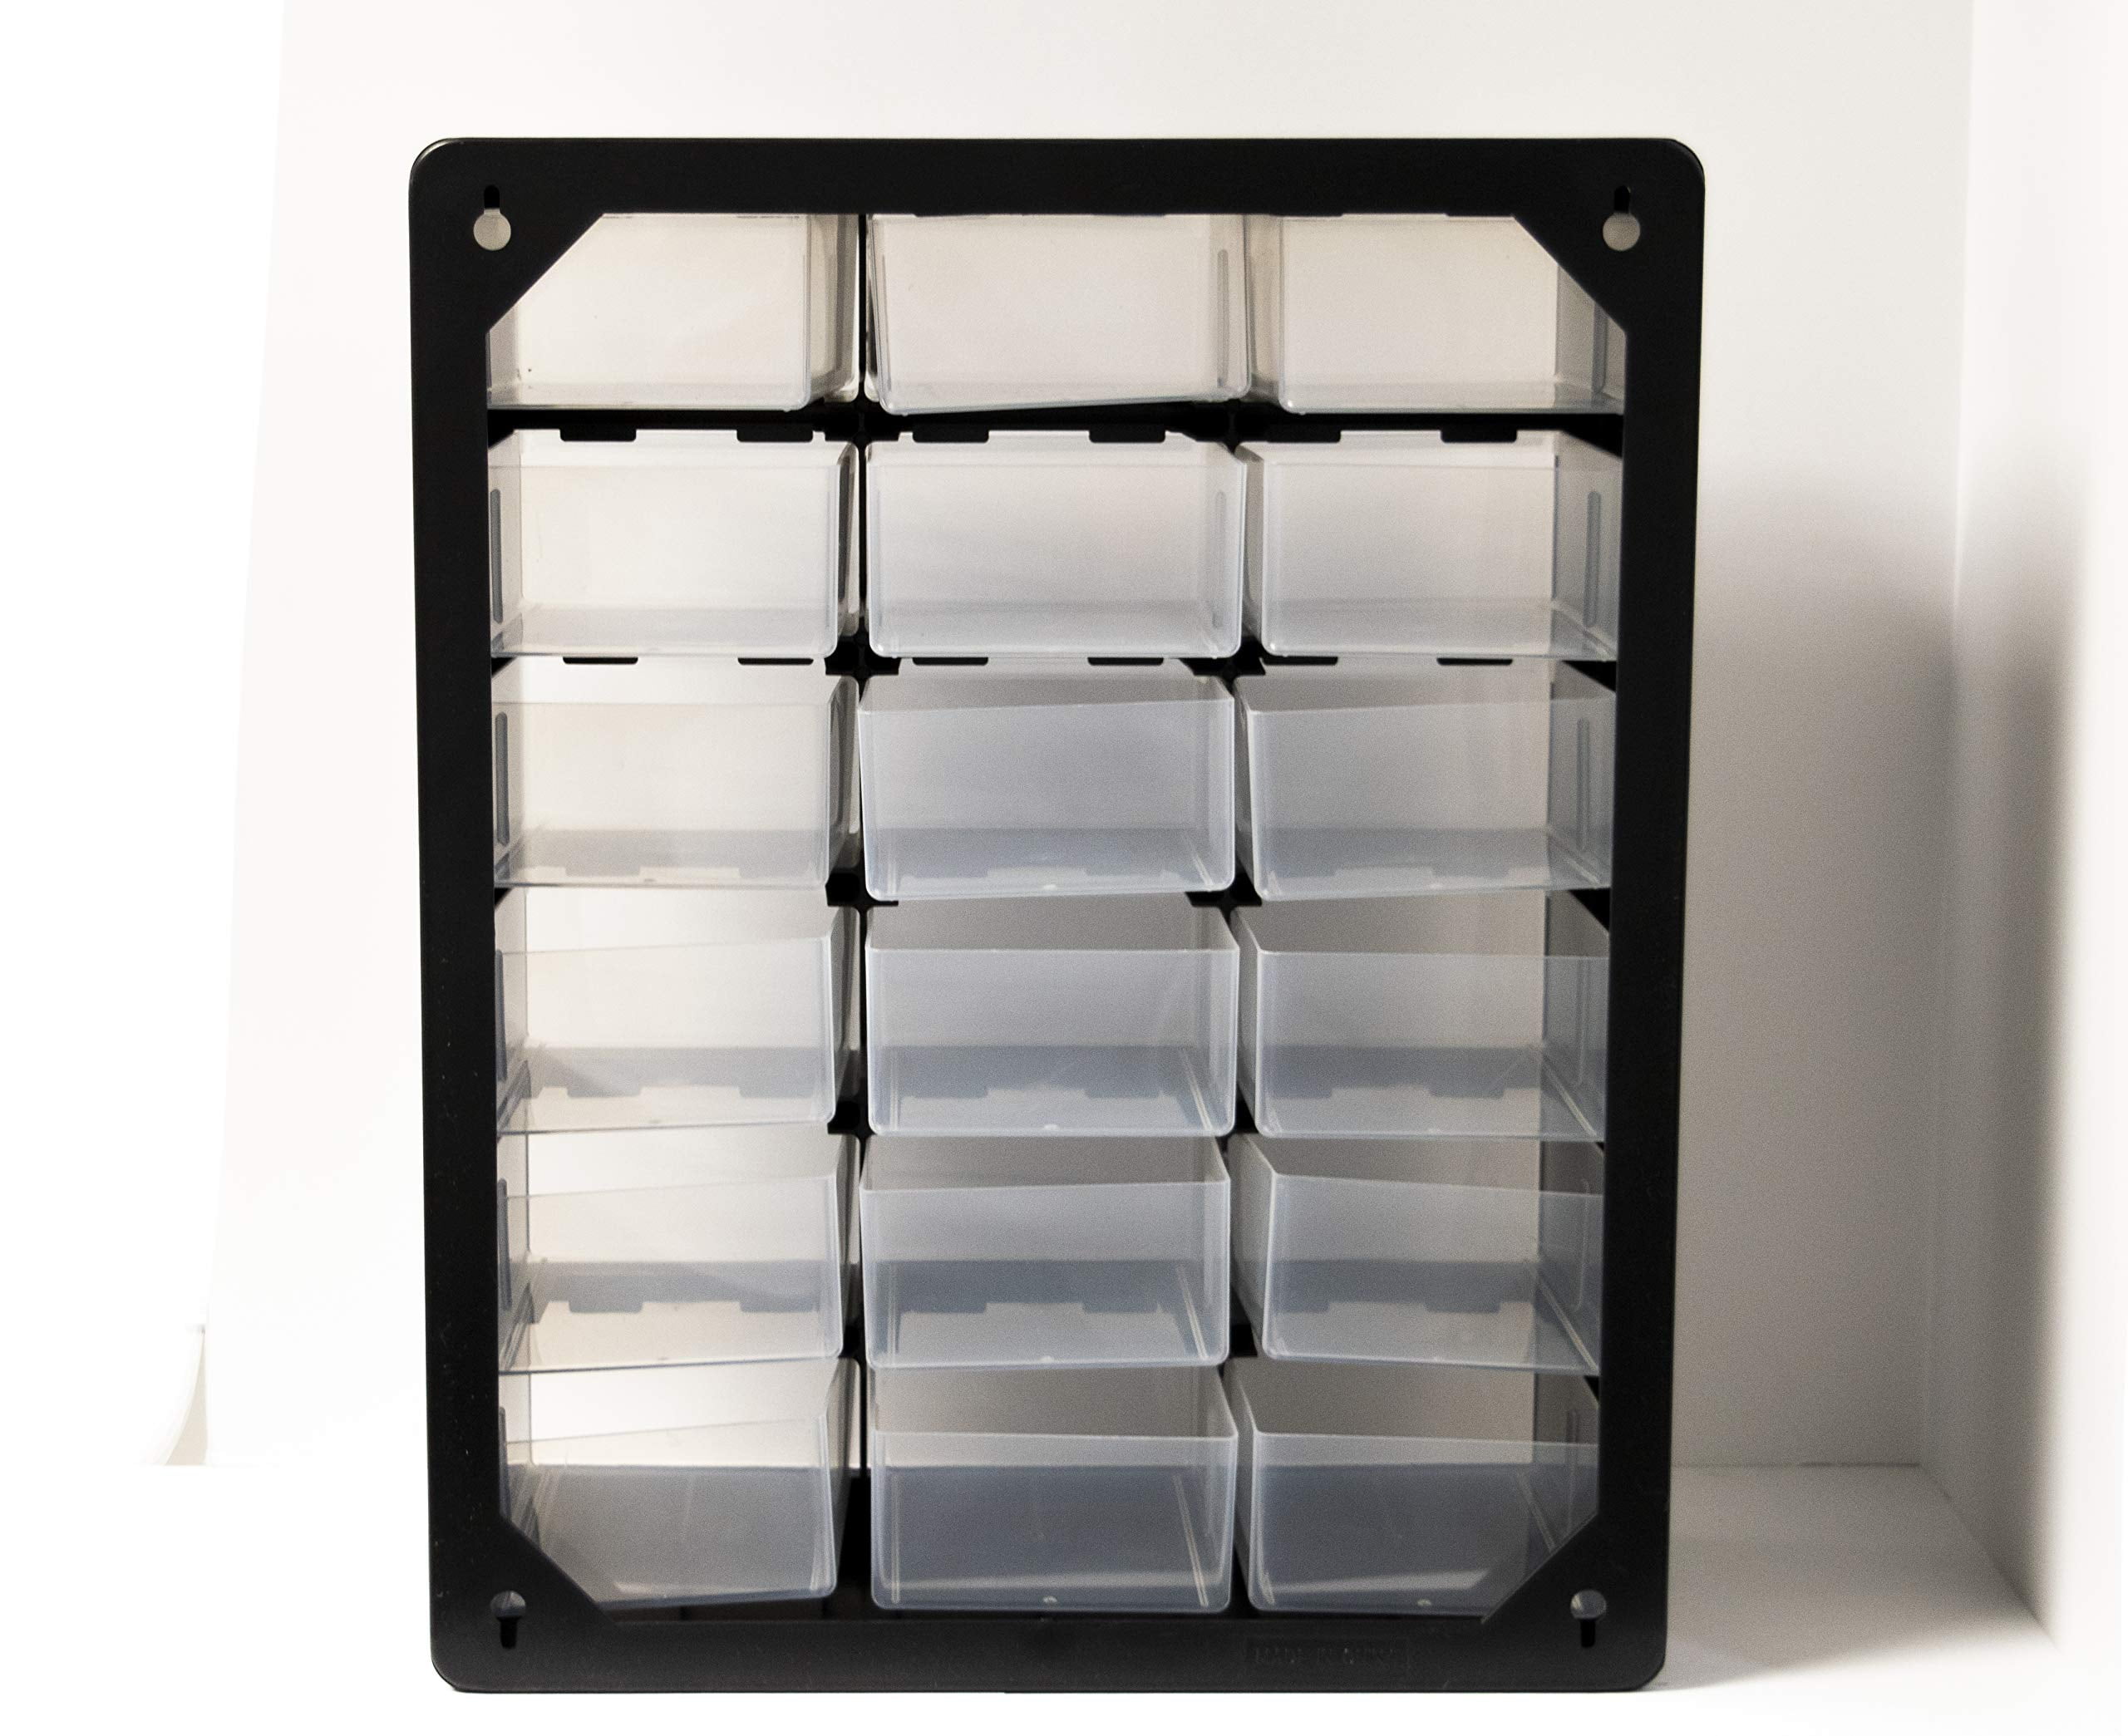 18-Drawer Small Parts Plastic Storage Cabinet Unit Organizer